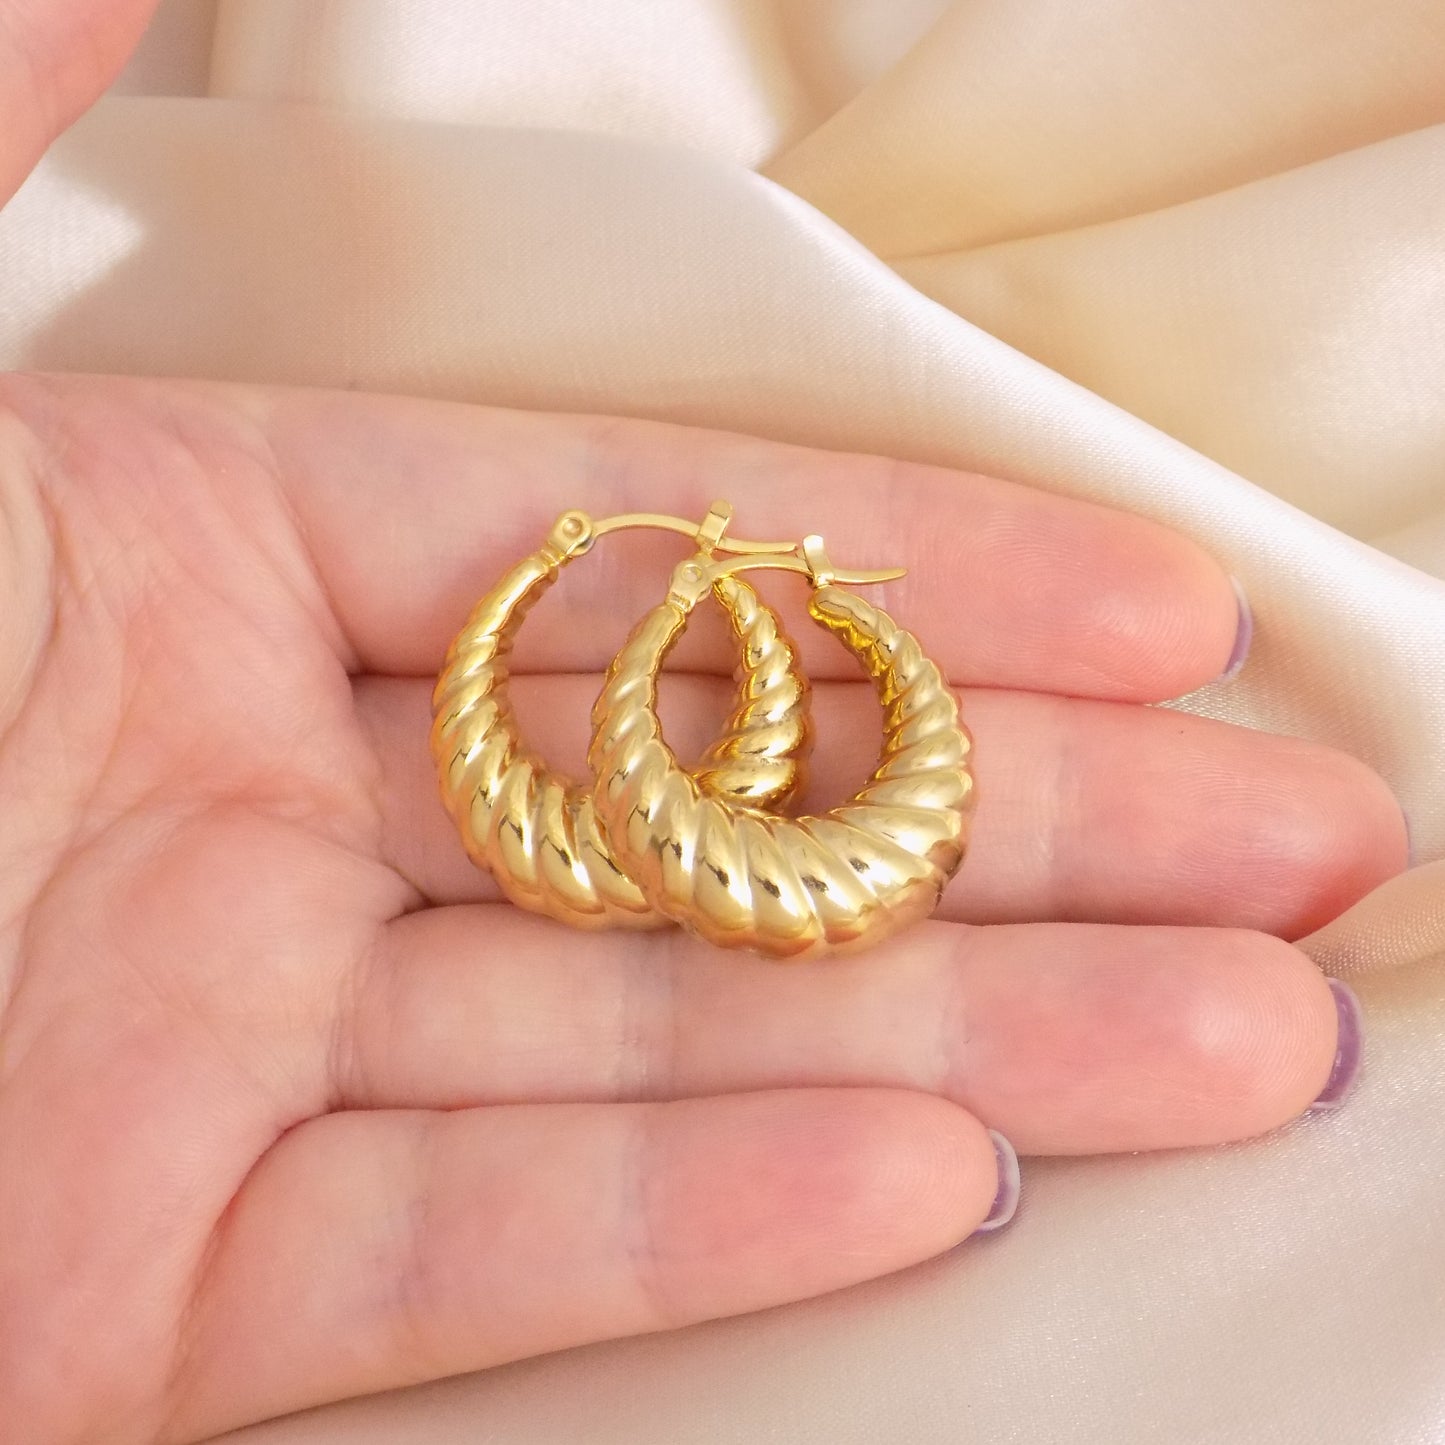 18K Gold Hoop Earrings Stainless Steel - Large Twisted Hoops - Trendy Modern Jewelry